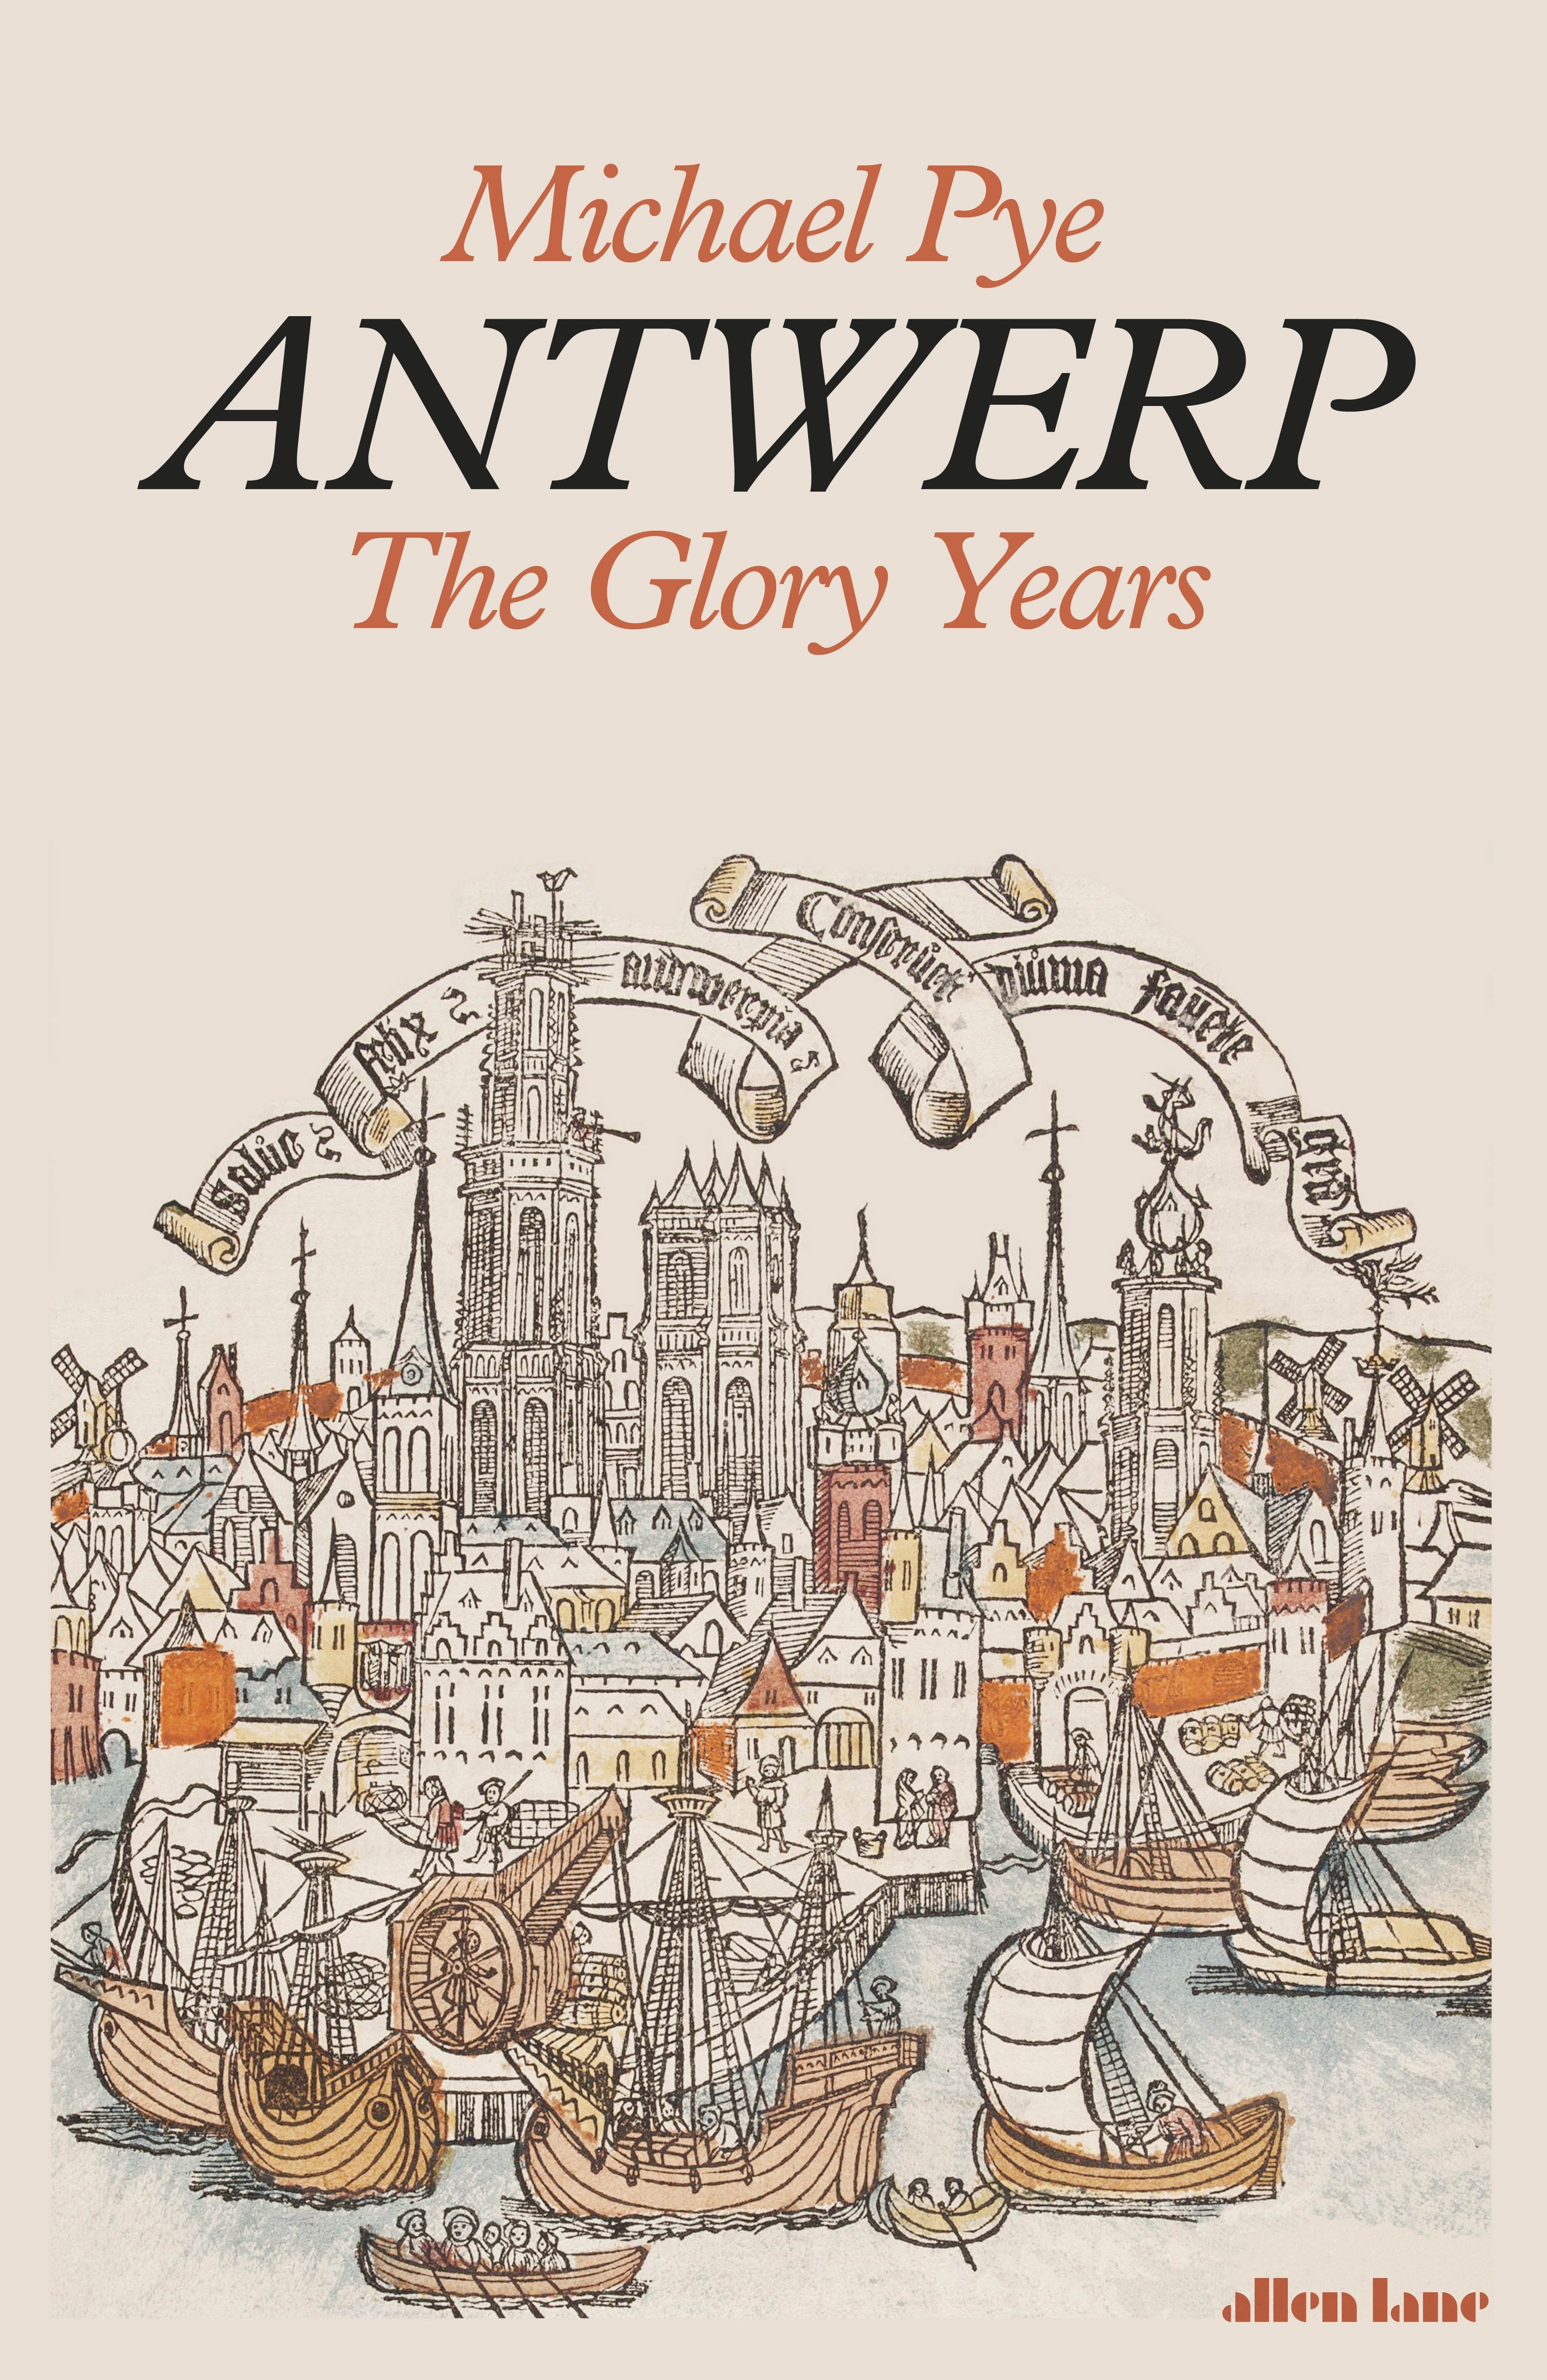 Book “Antwerp” by Michael Pye — August 5, 2021